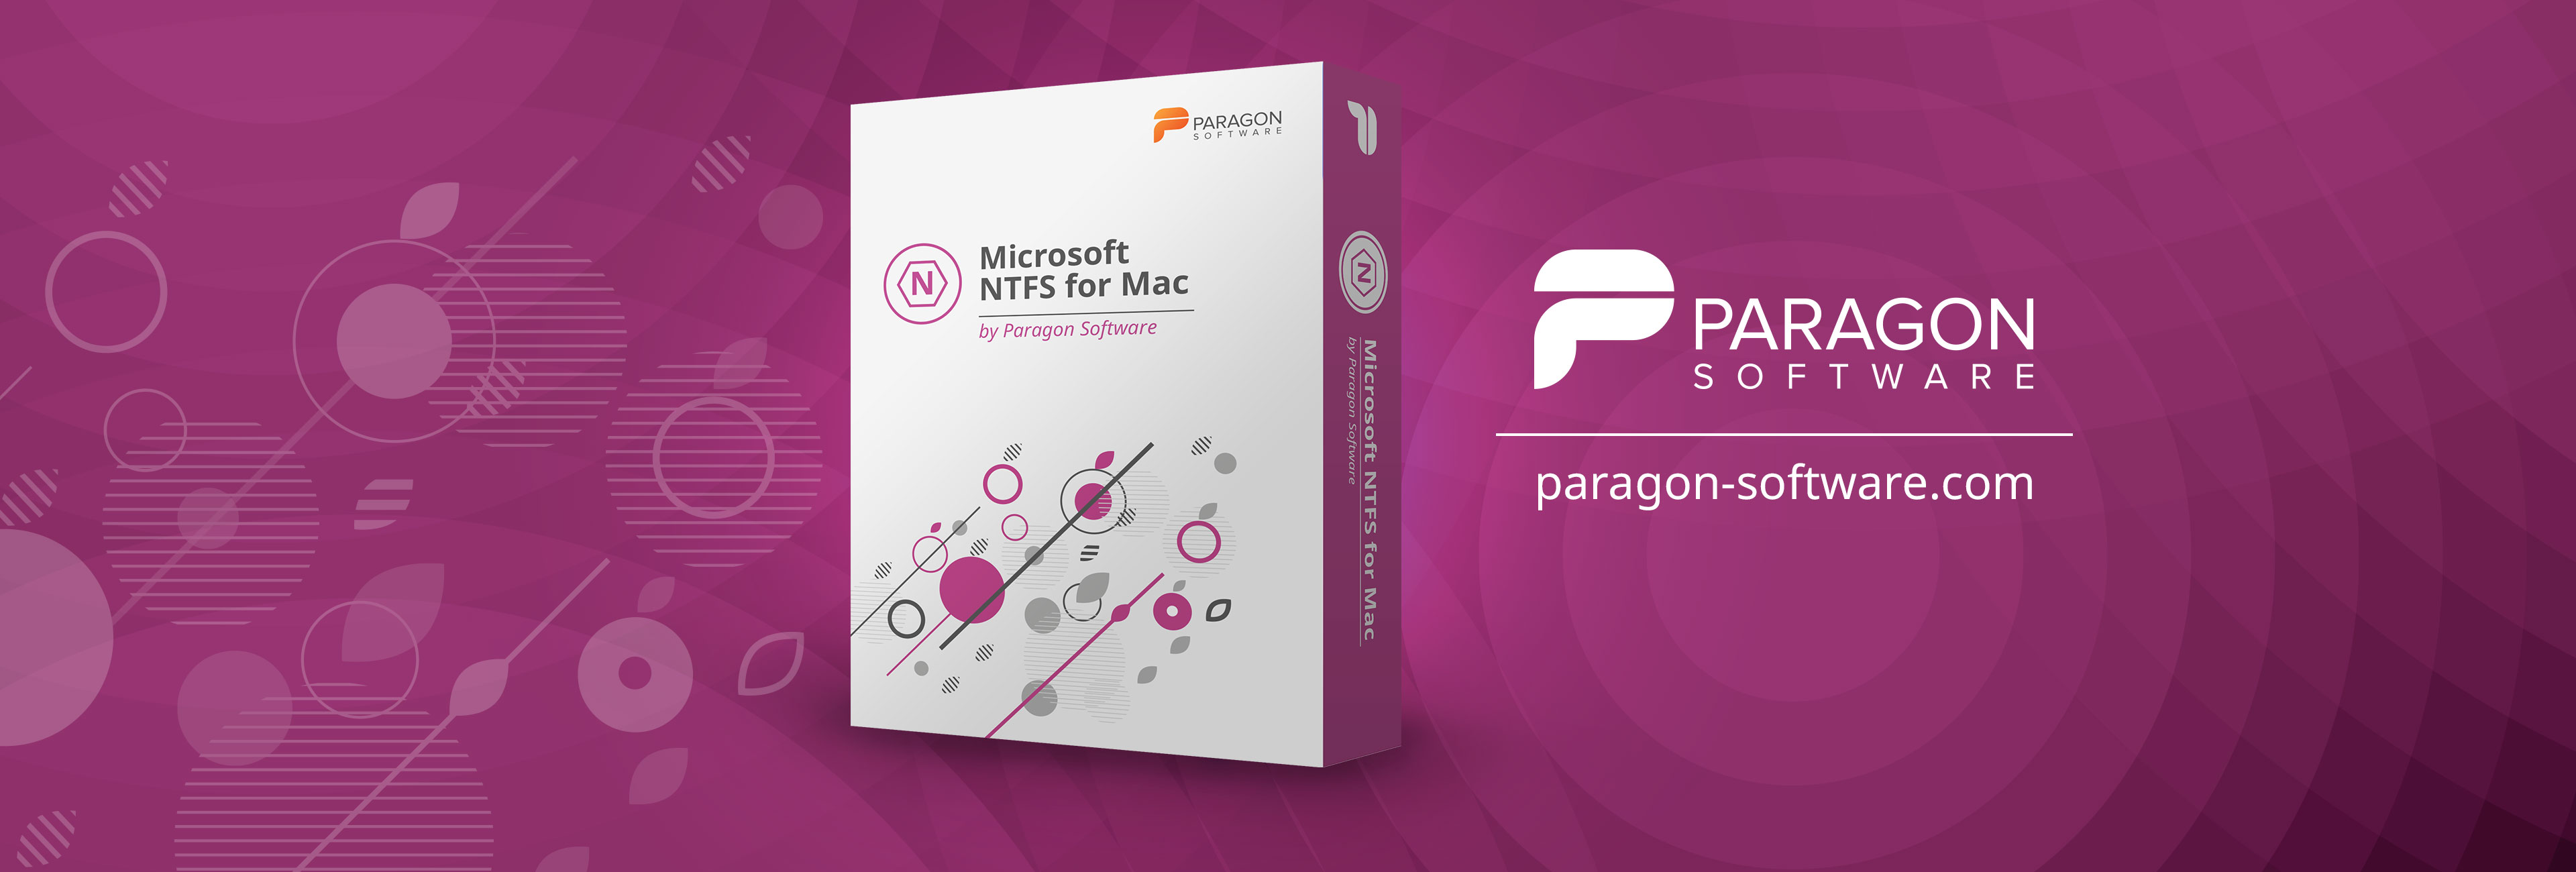 free paragon ntfs for mac